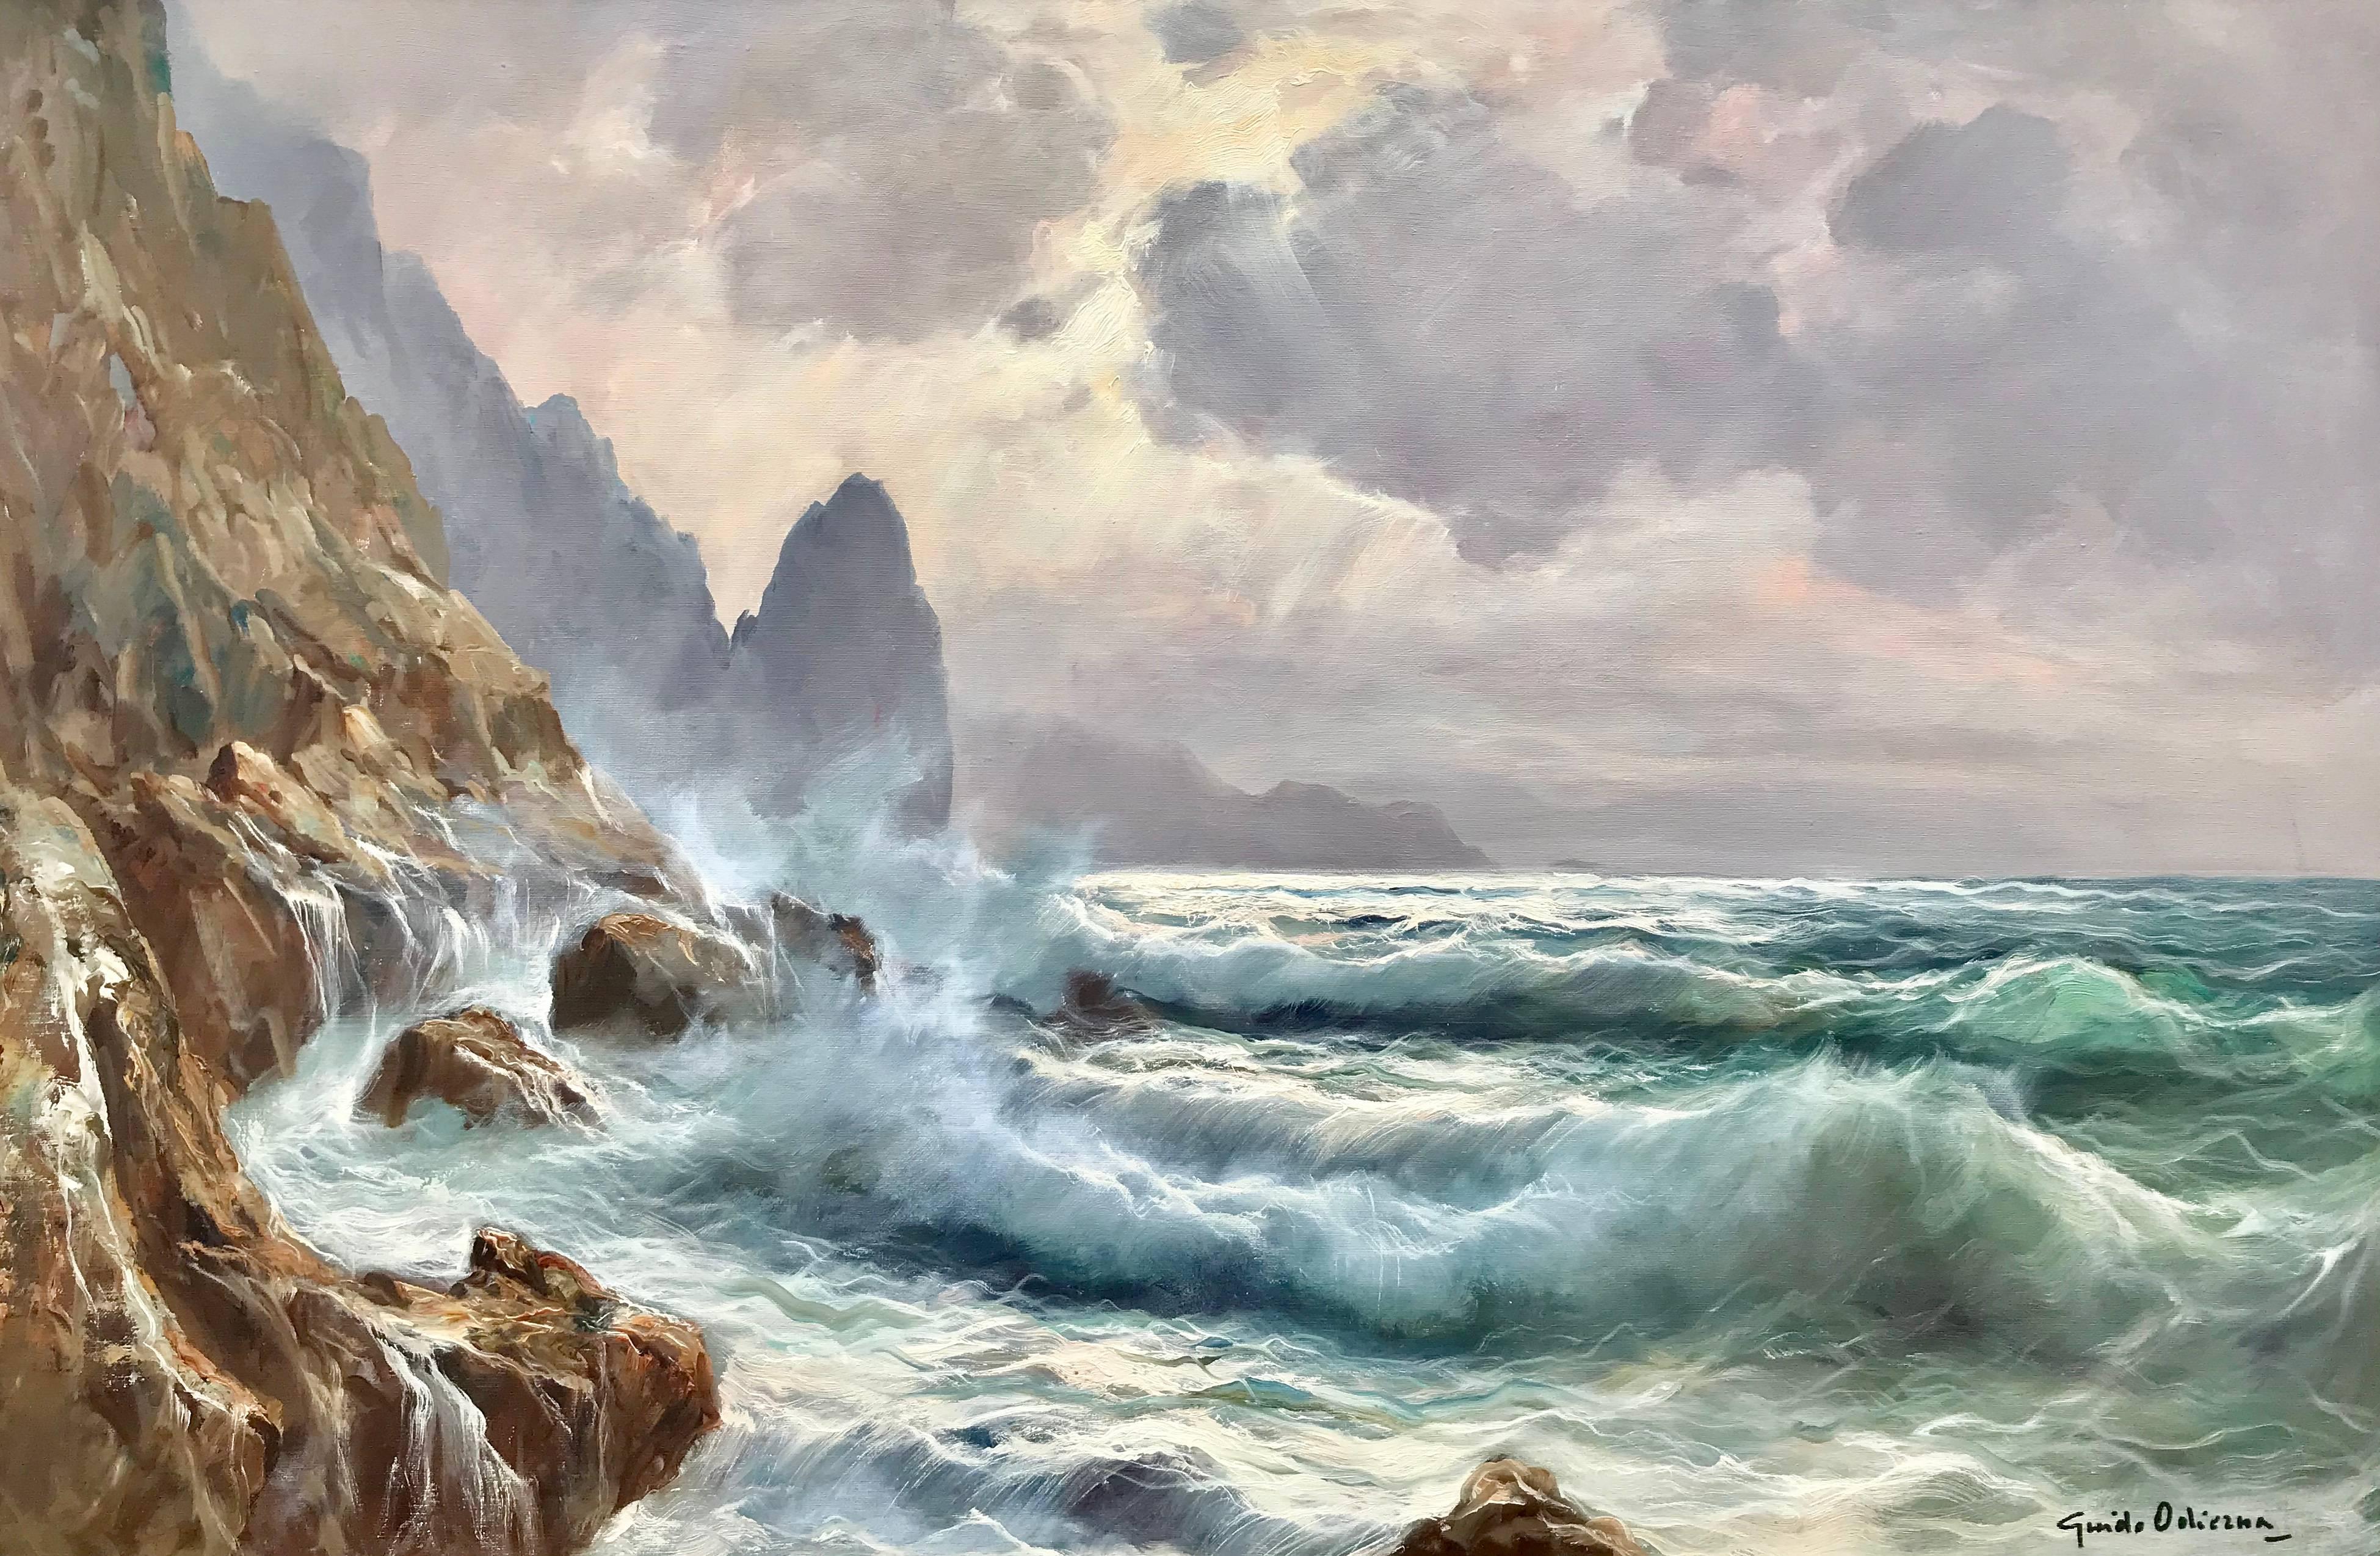 Guido Odierna Landscape Painting - “Breakers, Capri"